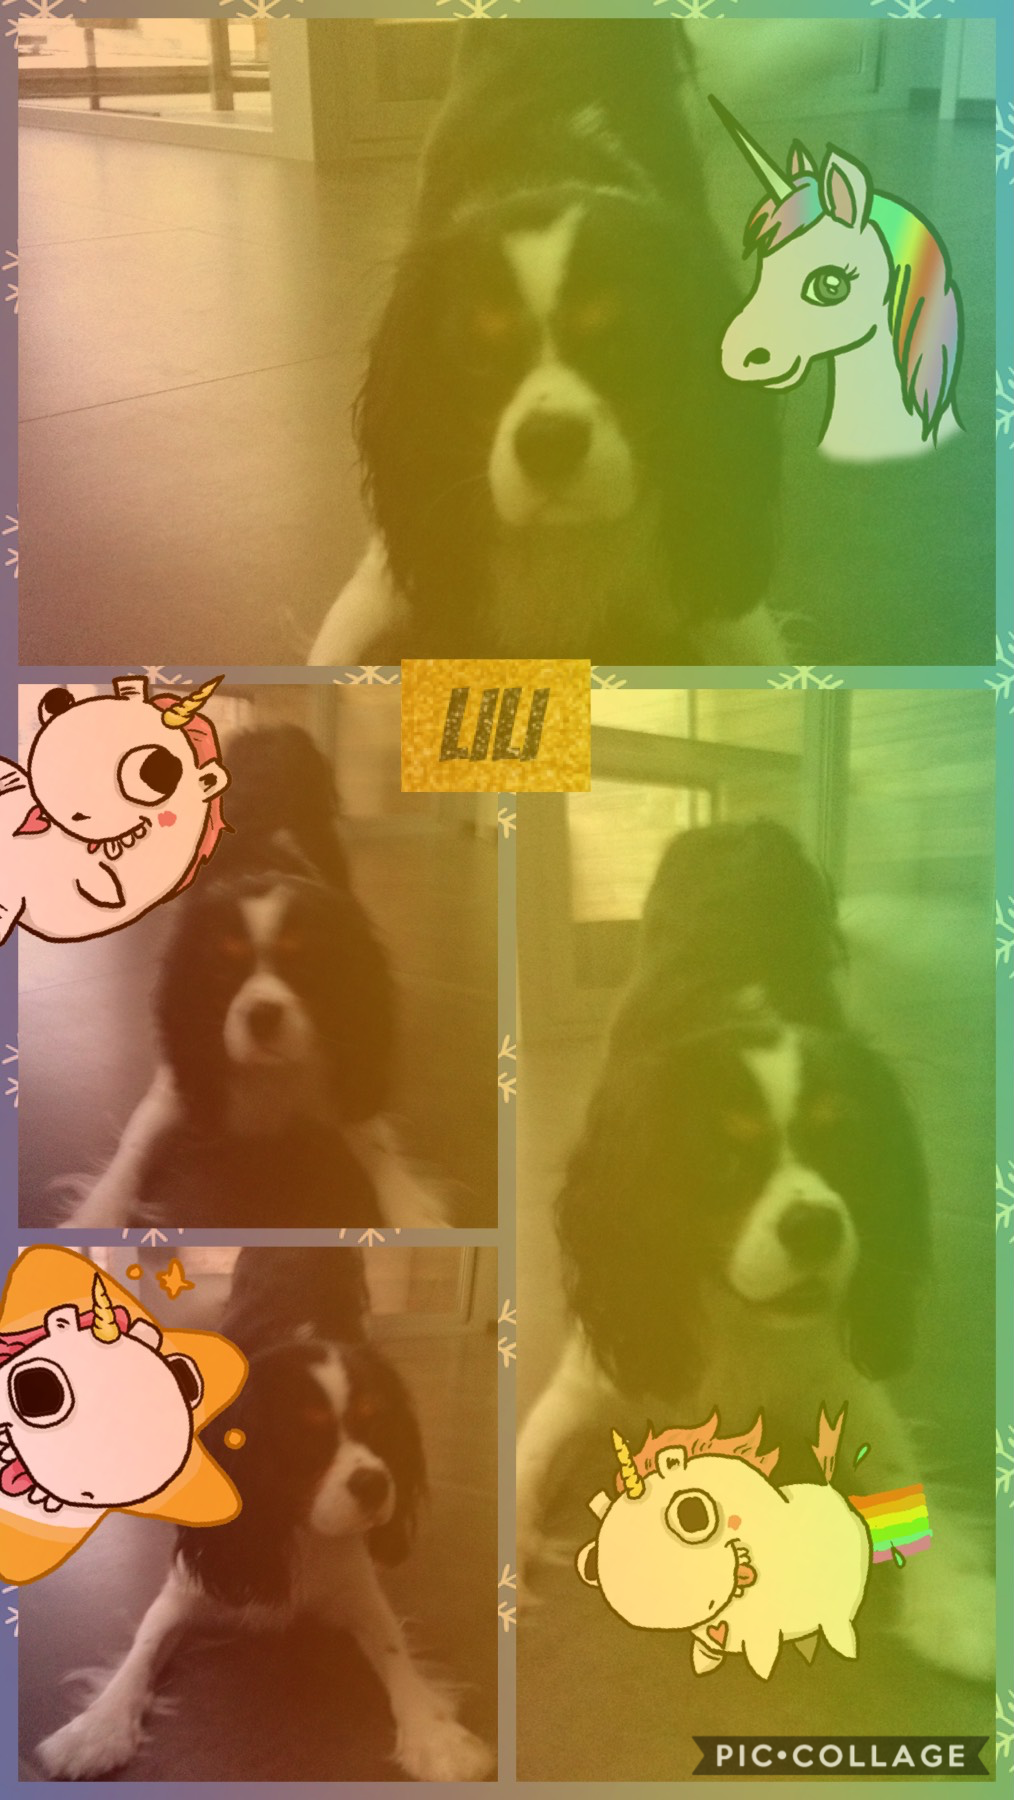 My cute dog Lili
       Love you Lili
